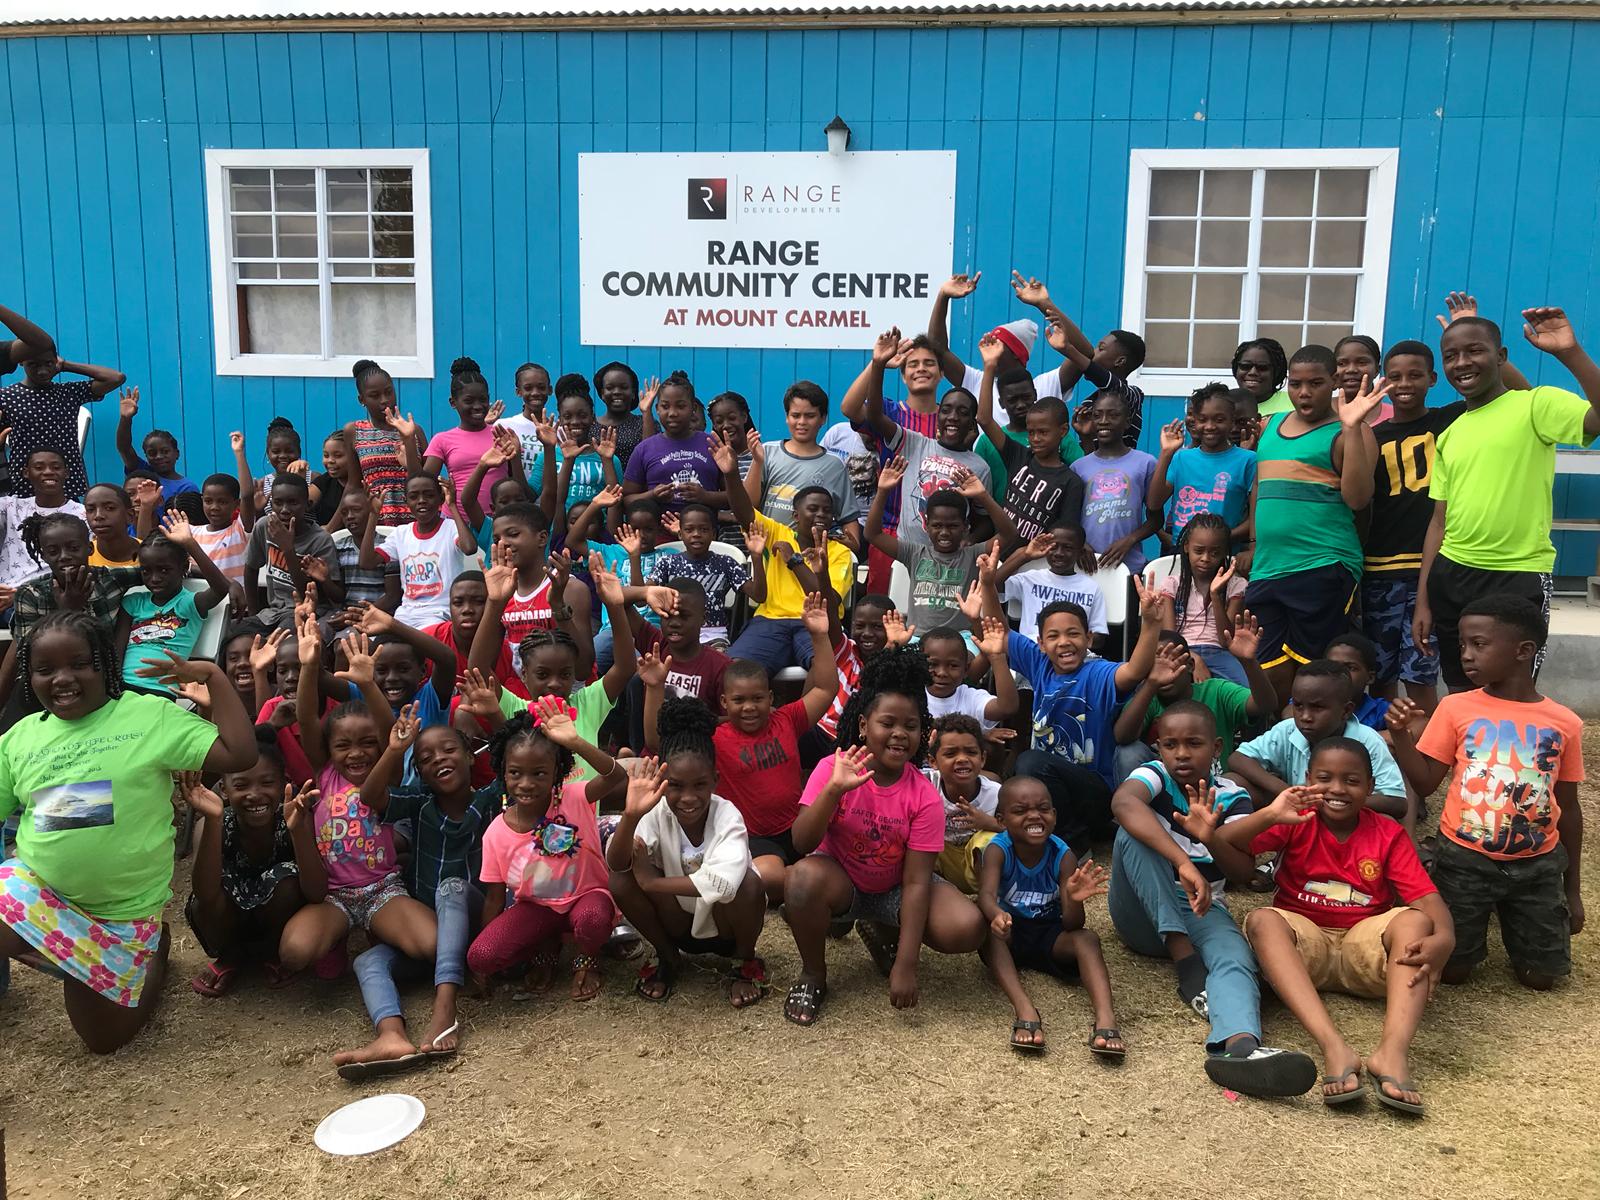  Range Developments Provides Permanent New Home for Popular Summer Camp in St.Kitts